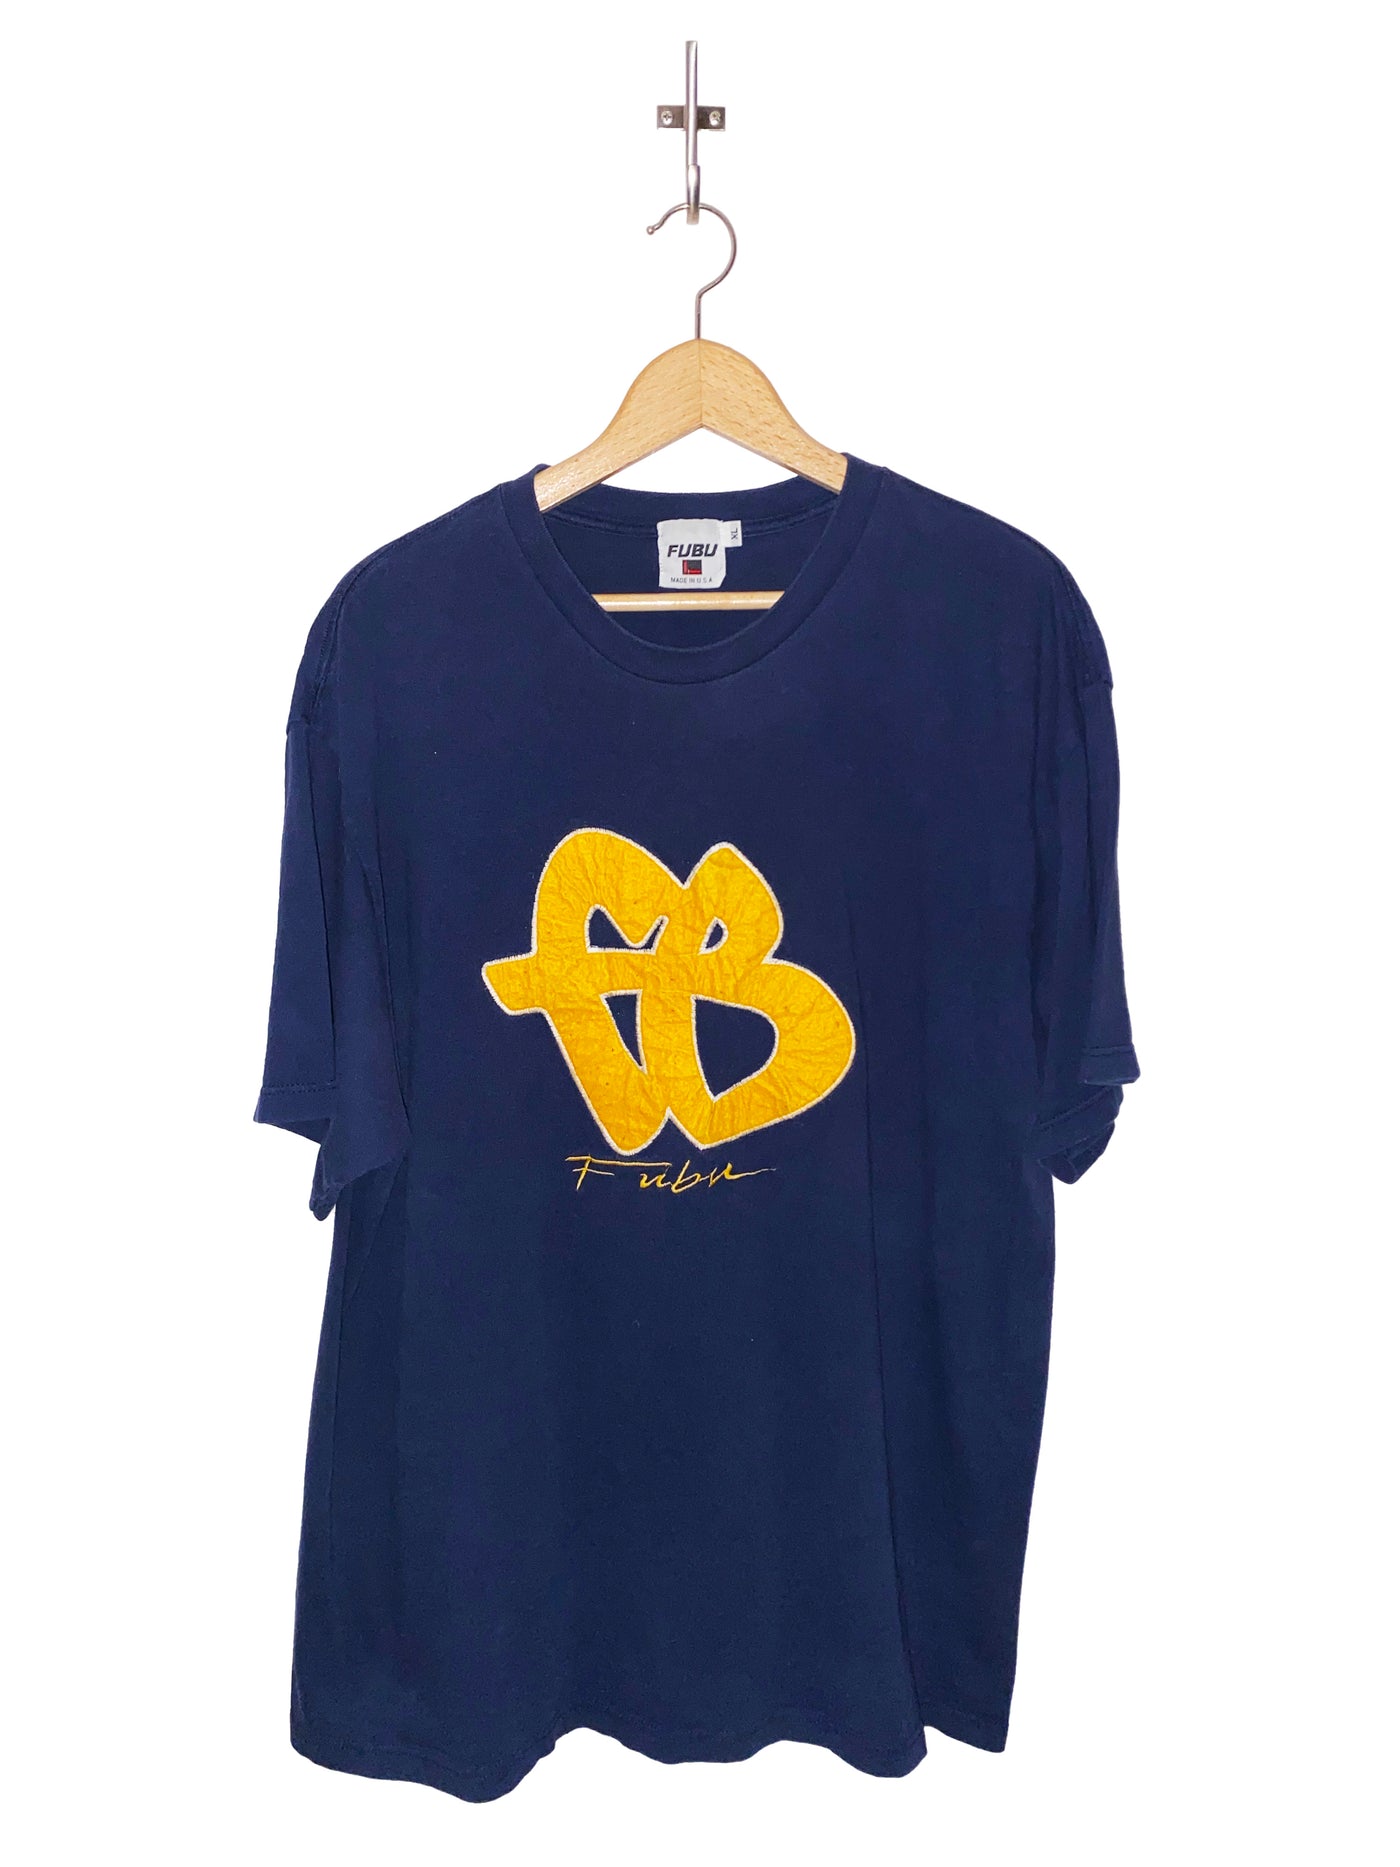 Vintage 80’s Fubu Letterman T-Shirt